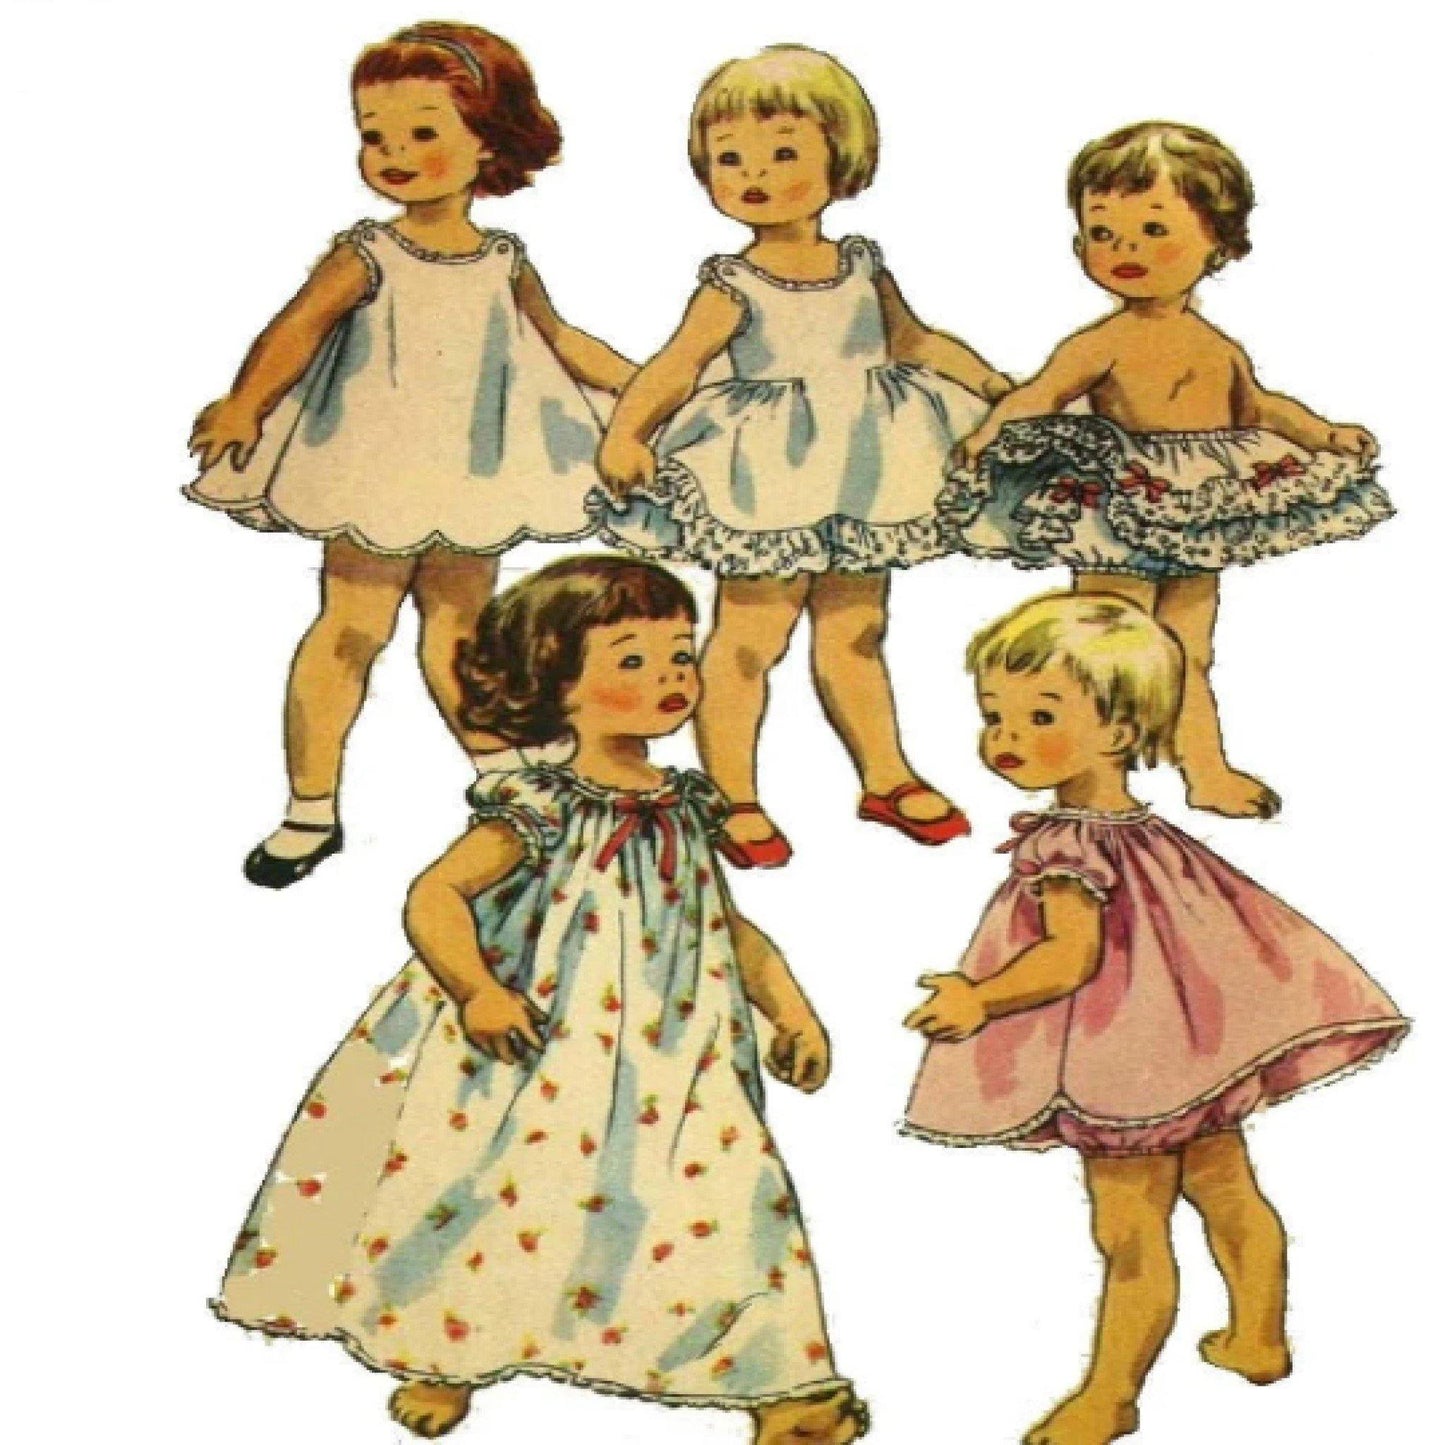 Child's' frilly petticoats